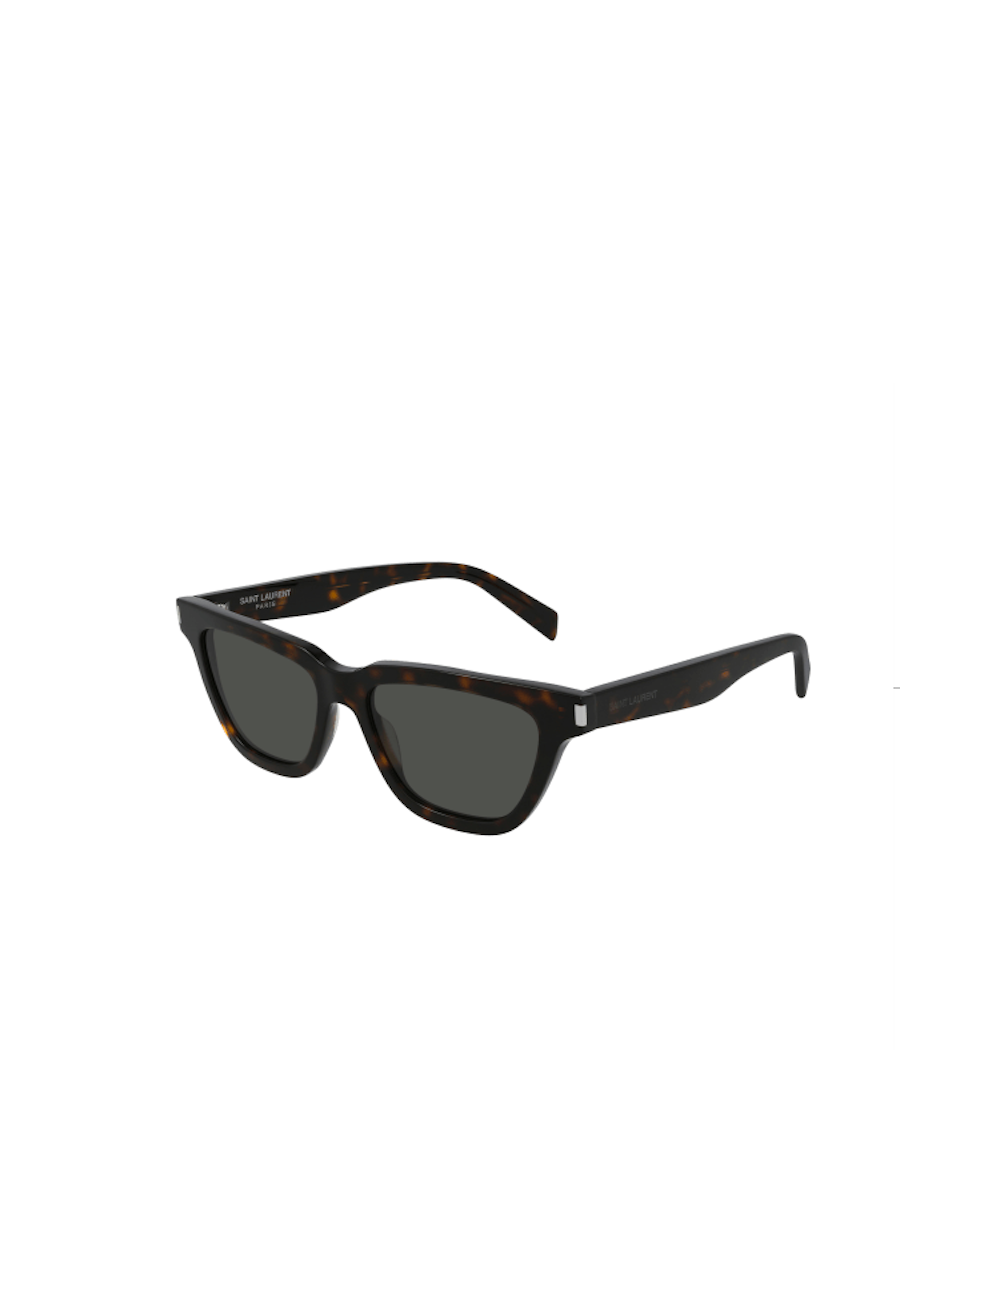 Sunglasses SAINT LAURENT SL 462 SULPICE